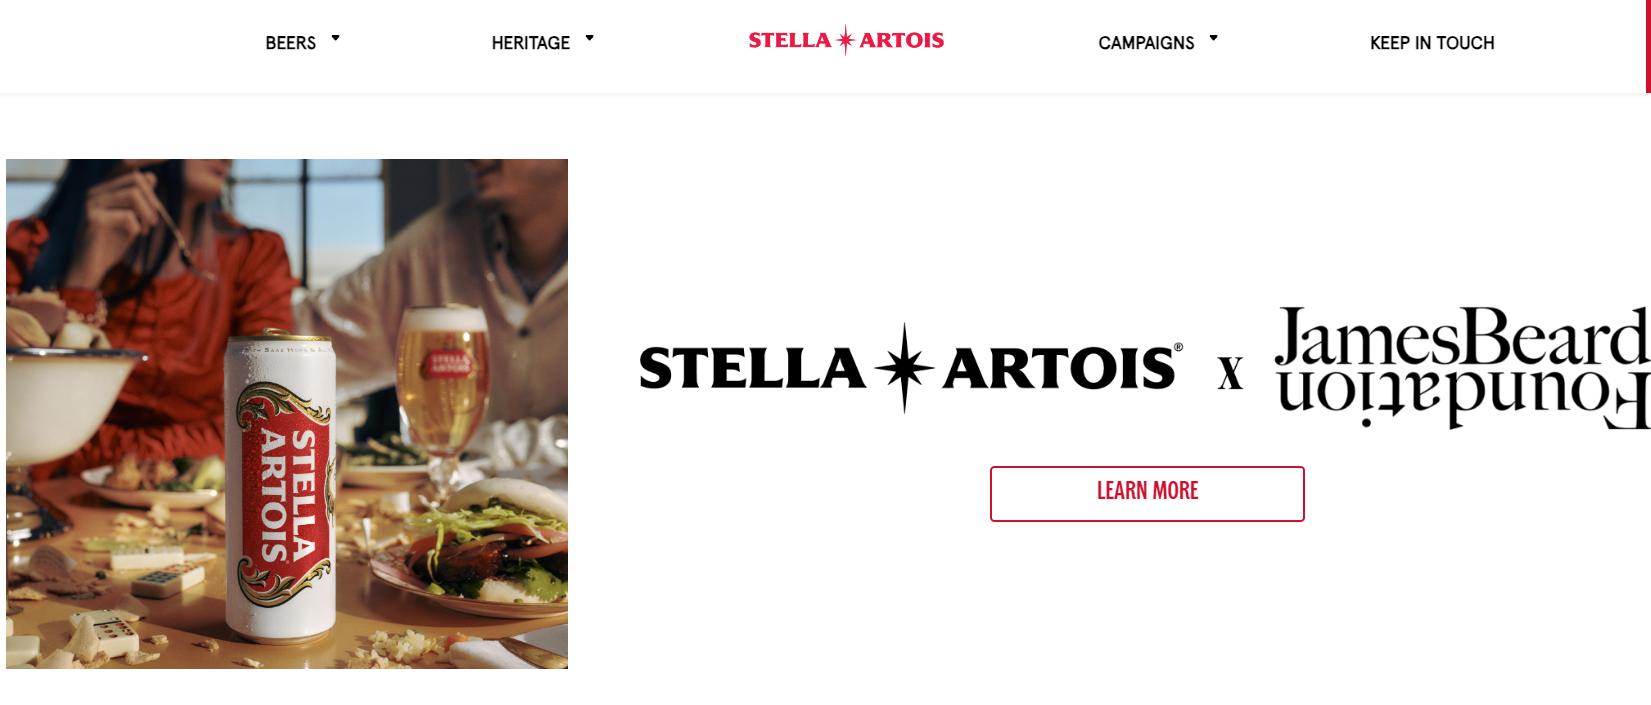 What Is Rebate Code Number For Stella Artois